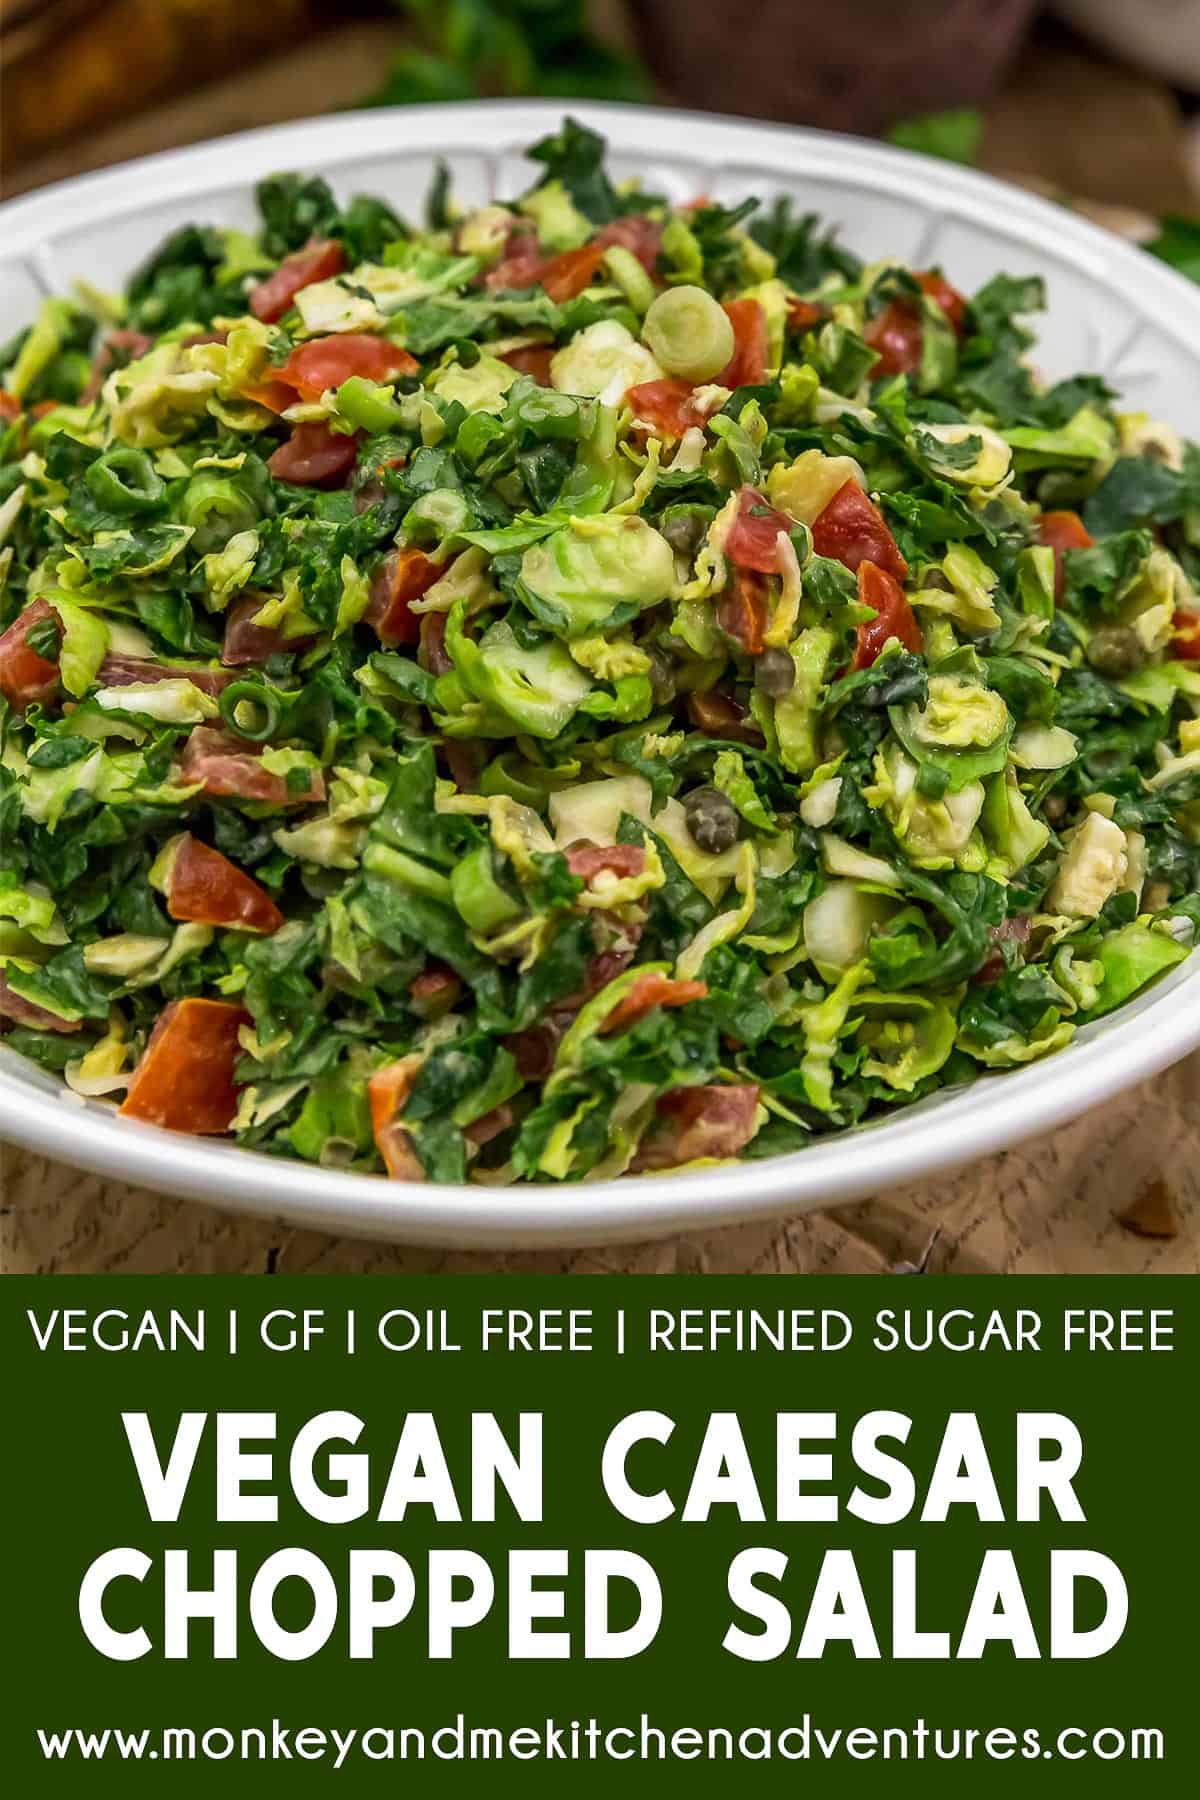 Vegan Caesar Chopped Salad with text description